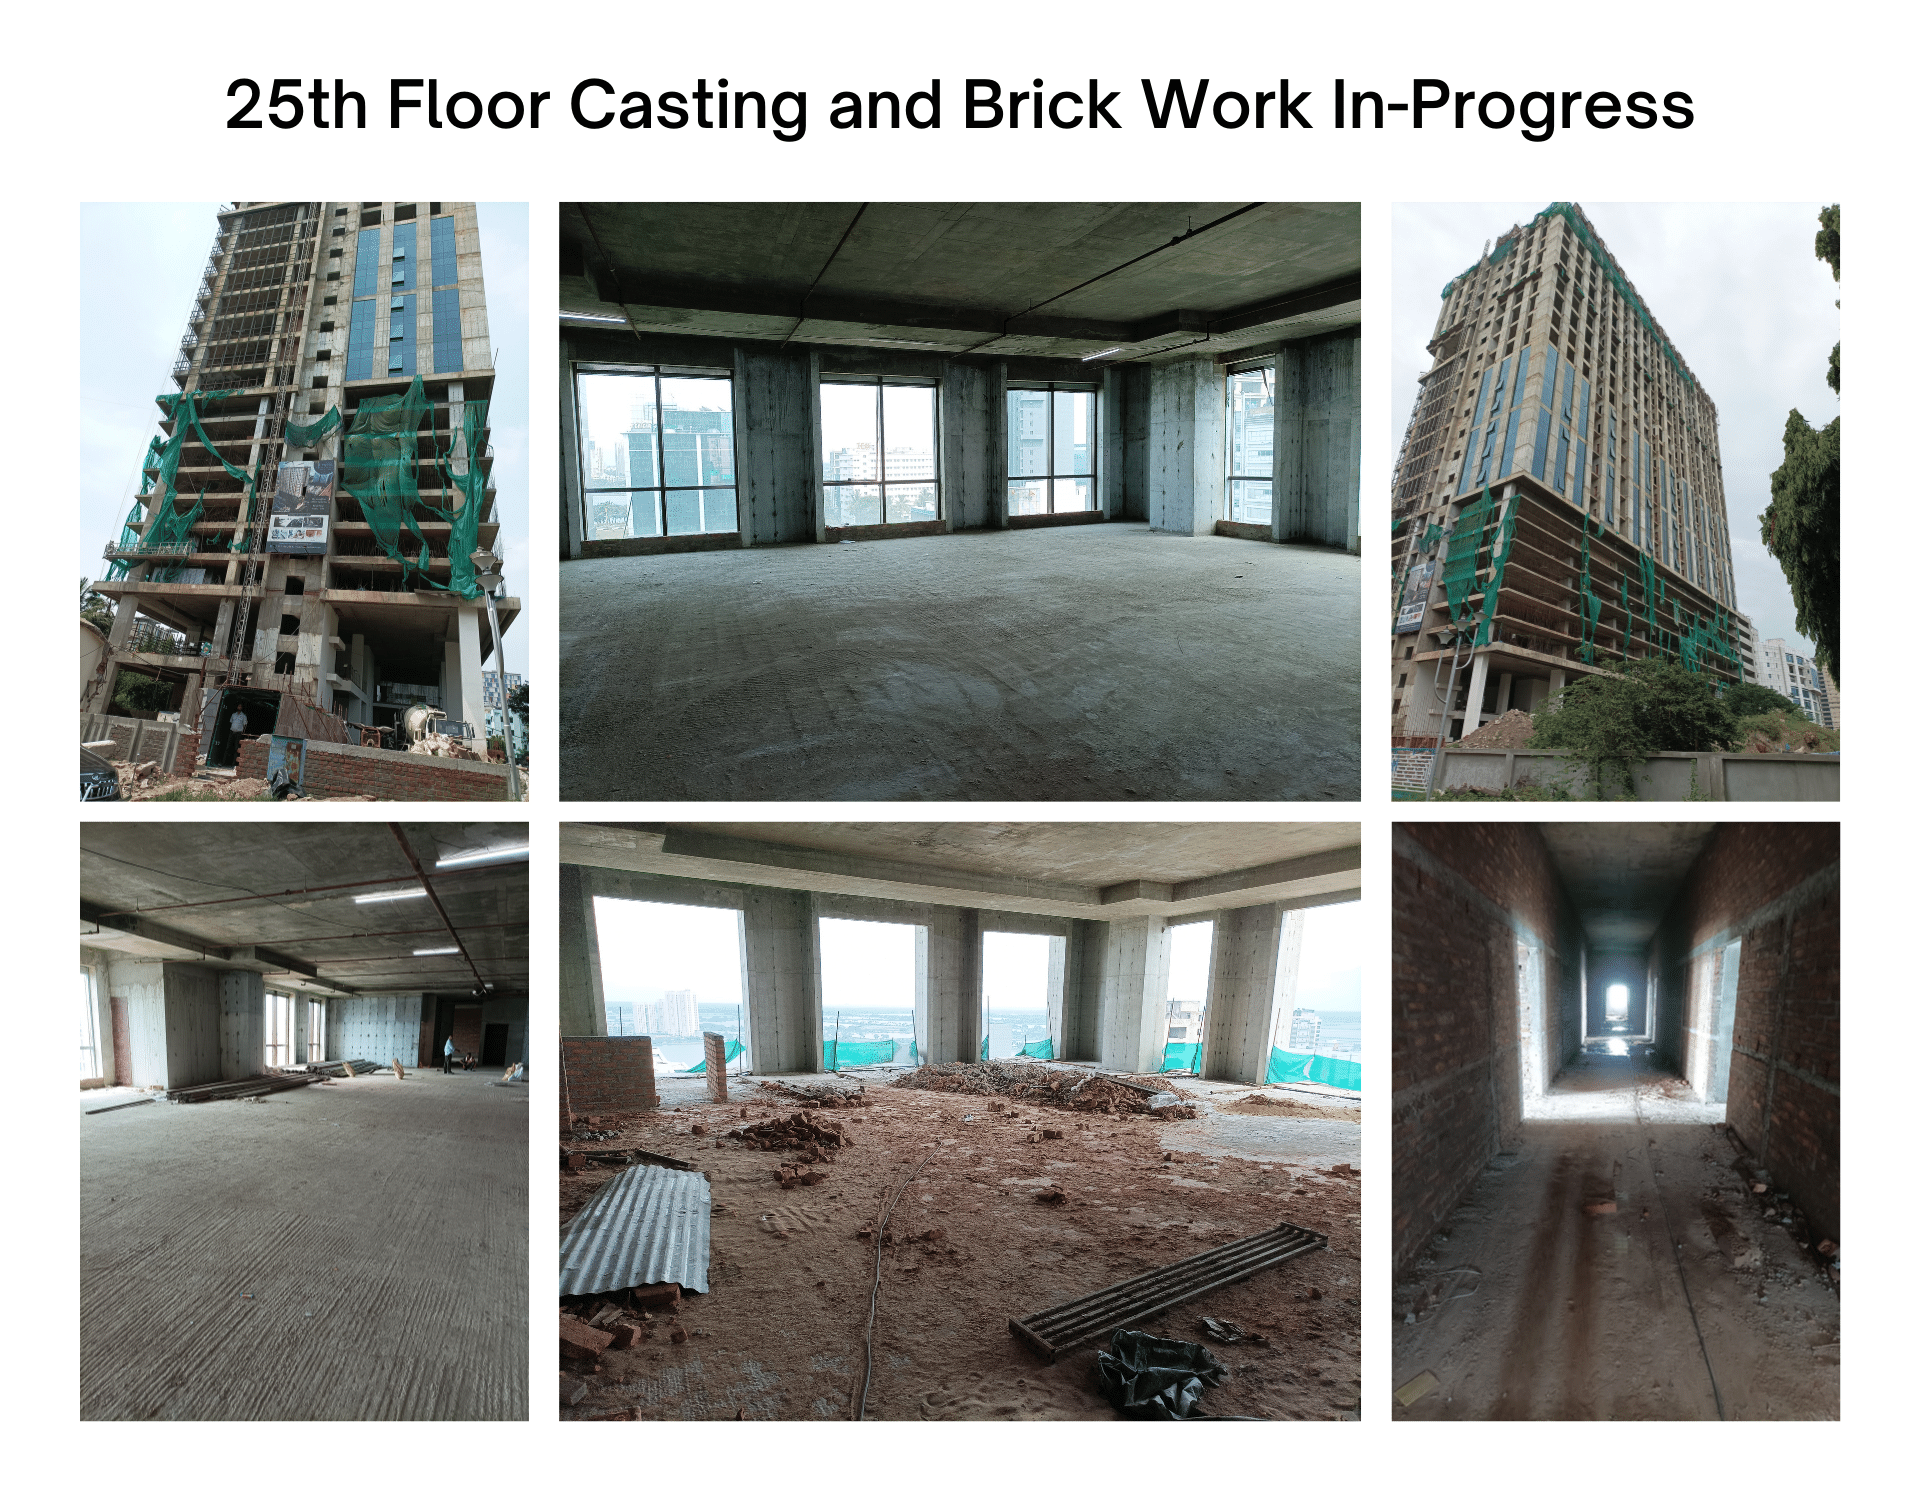 Imagine Tech Park - Construction 25th floor Update